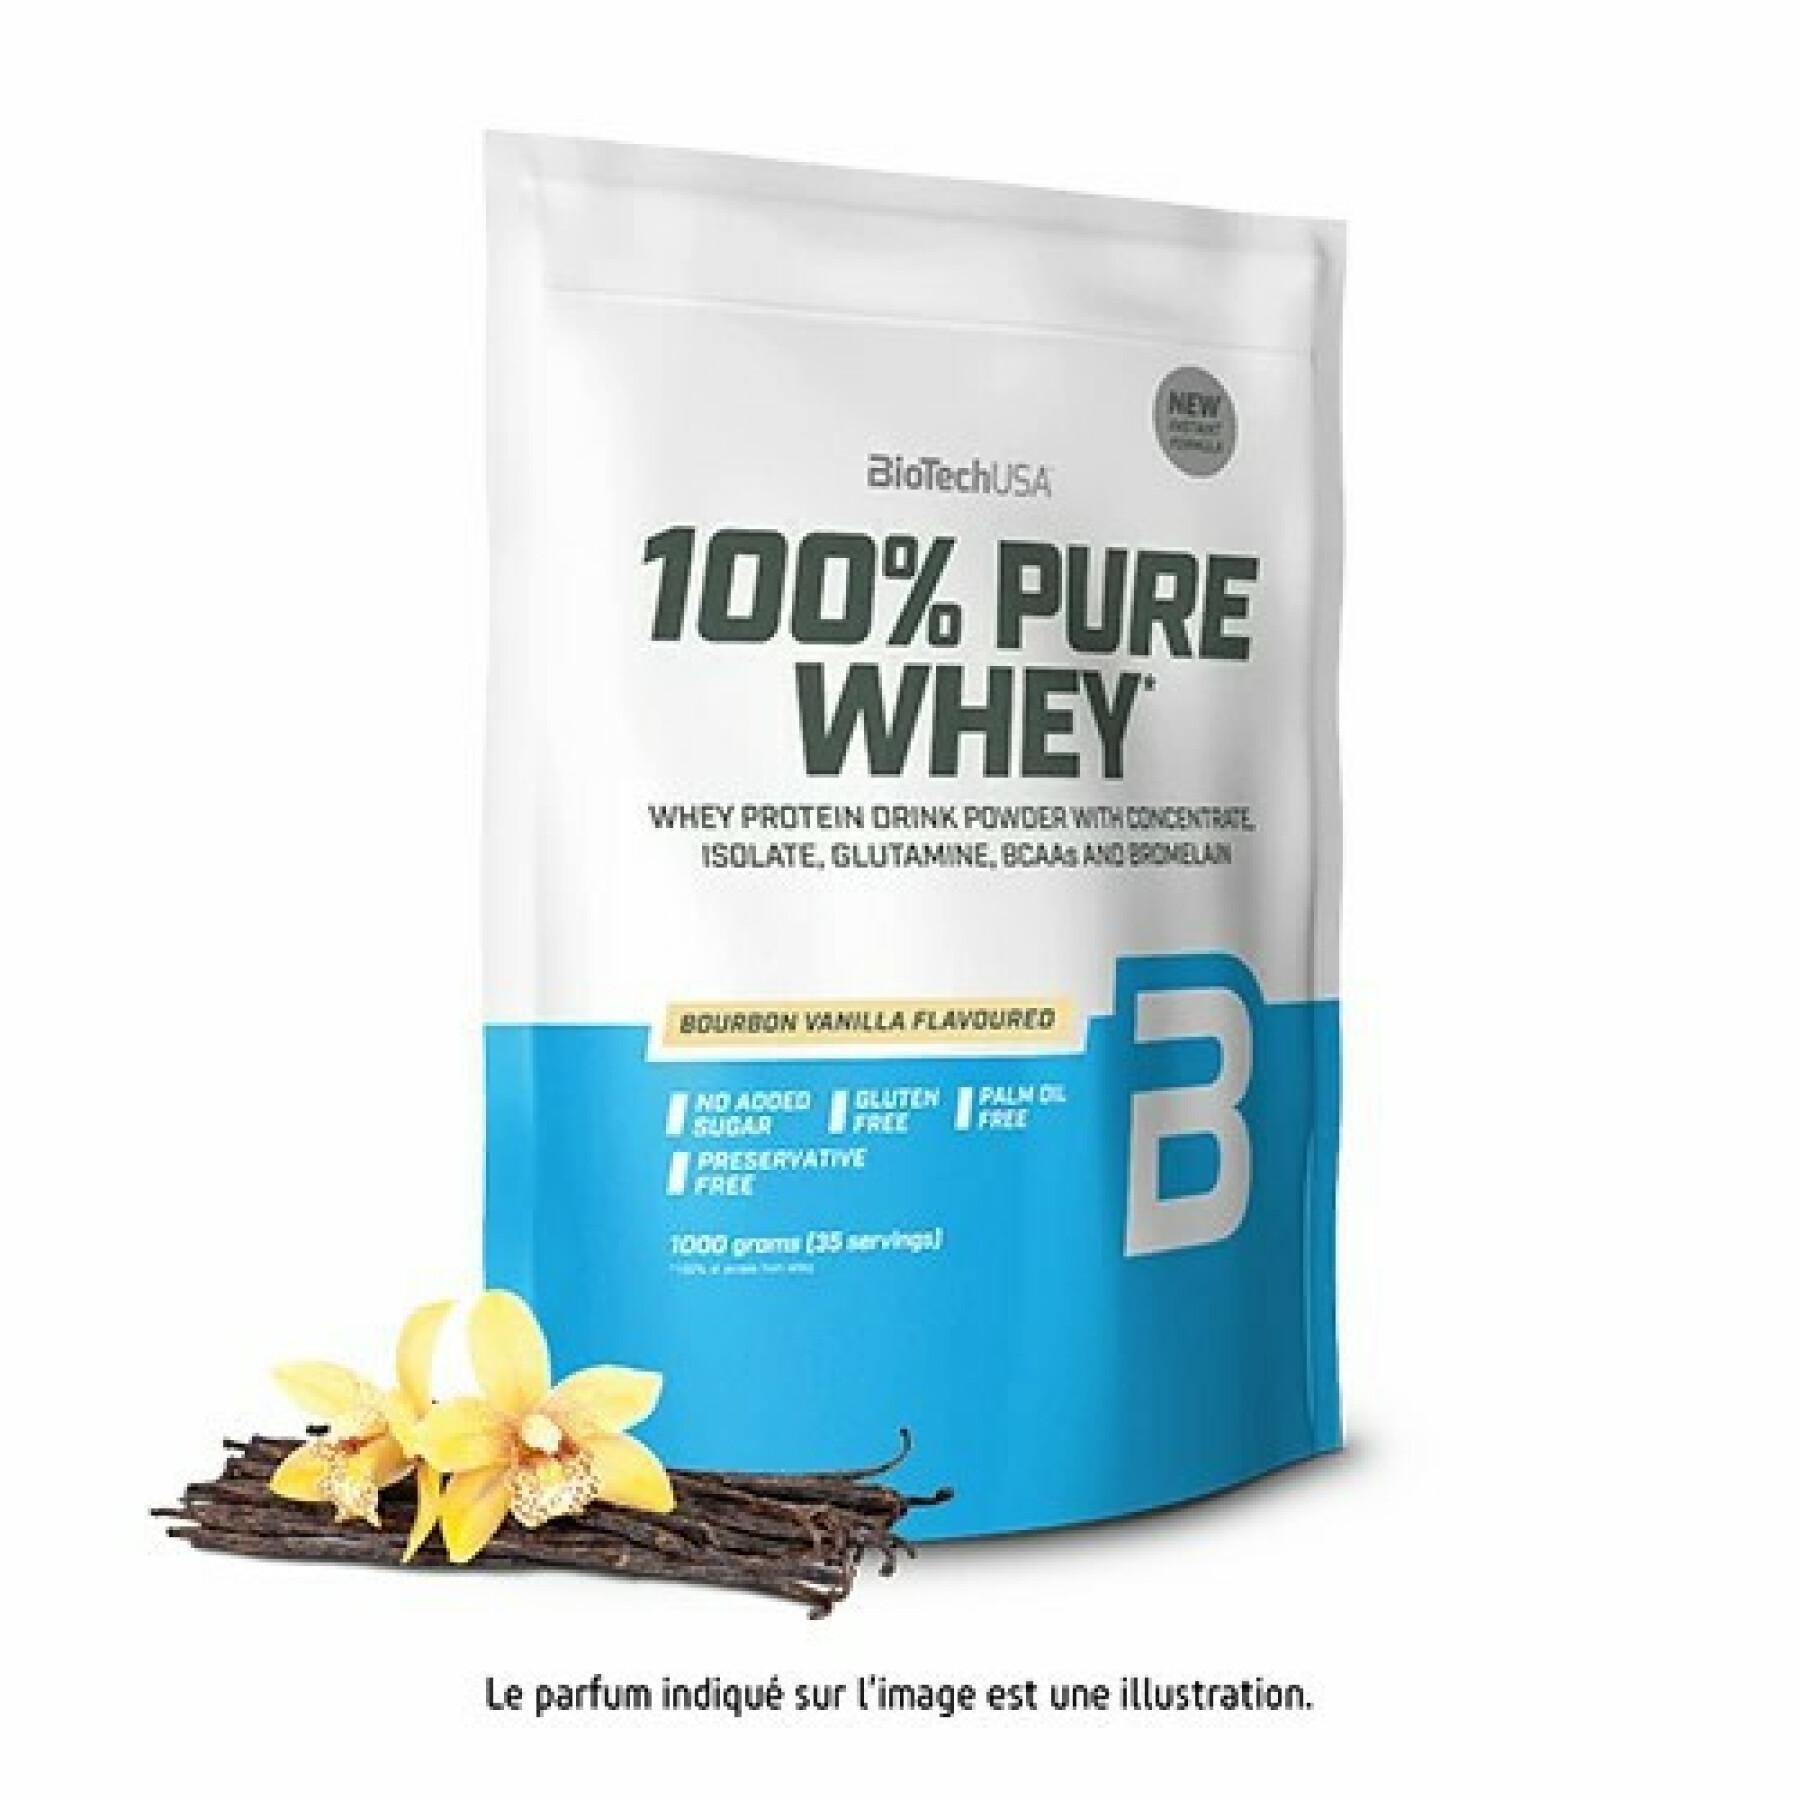 Pak van 10 zakken 100% zuivere wei-eiwitten Biotech USA - Vanille bourbon - 1kg